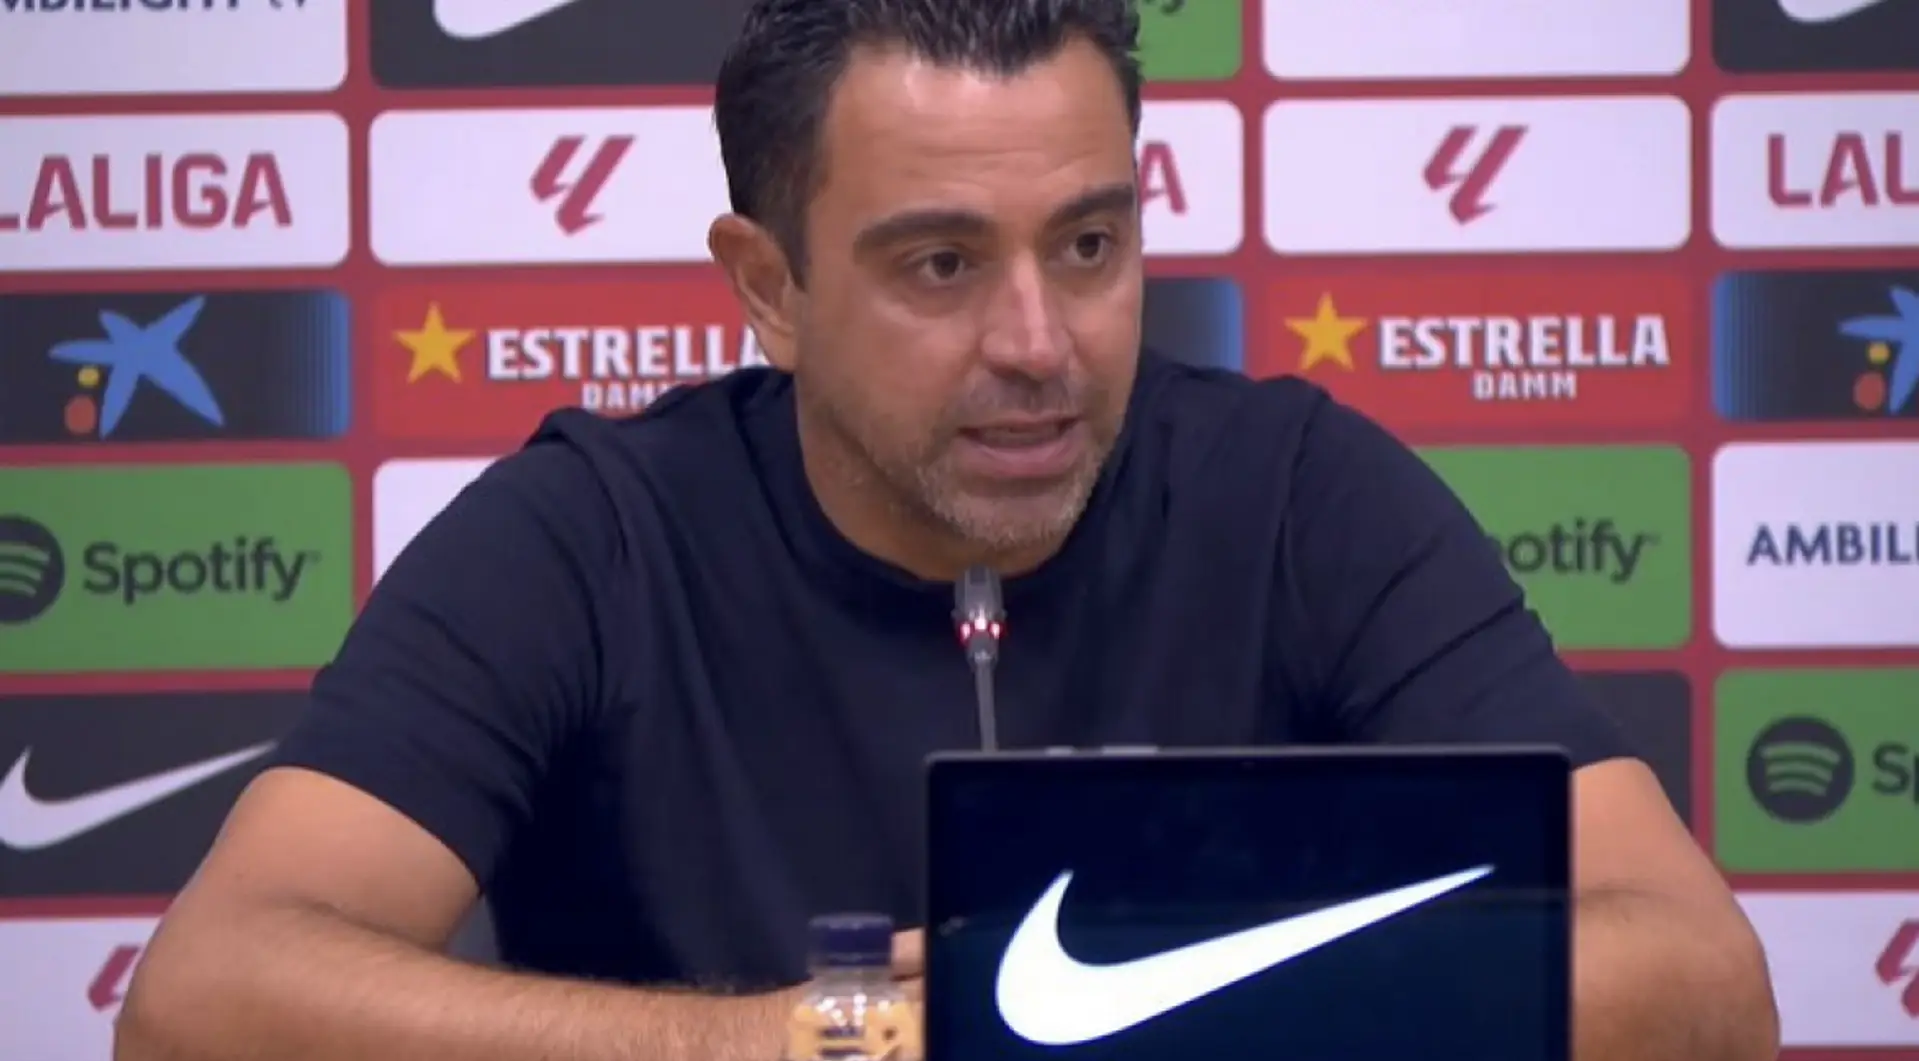 'It's my fault': Xavi explains poor performance before 80th minute v Celta Vigo